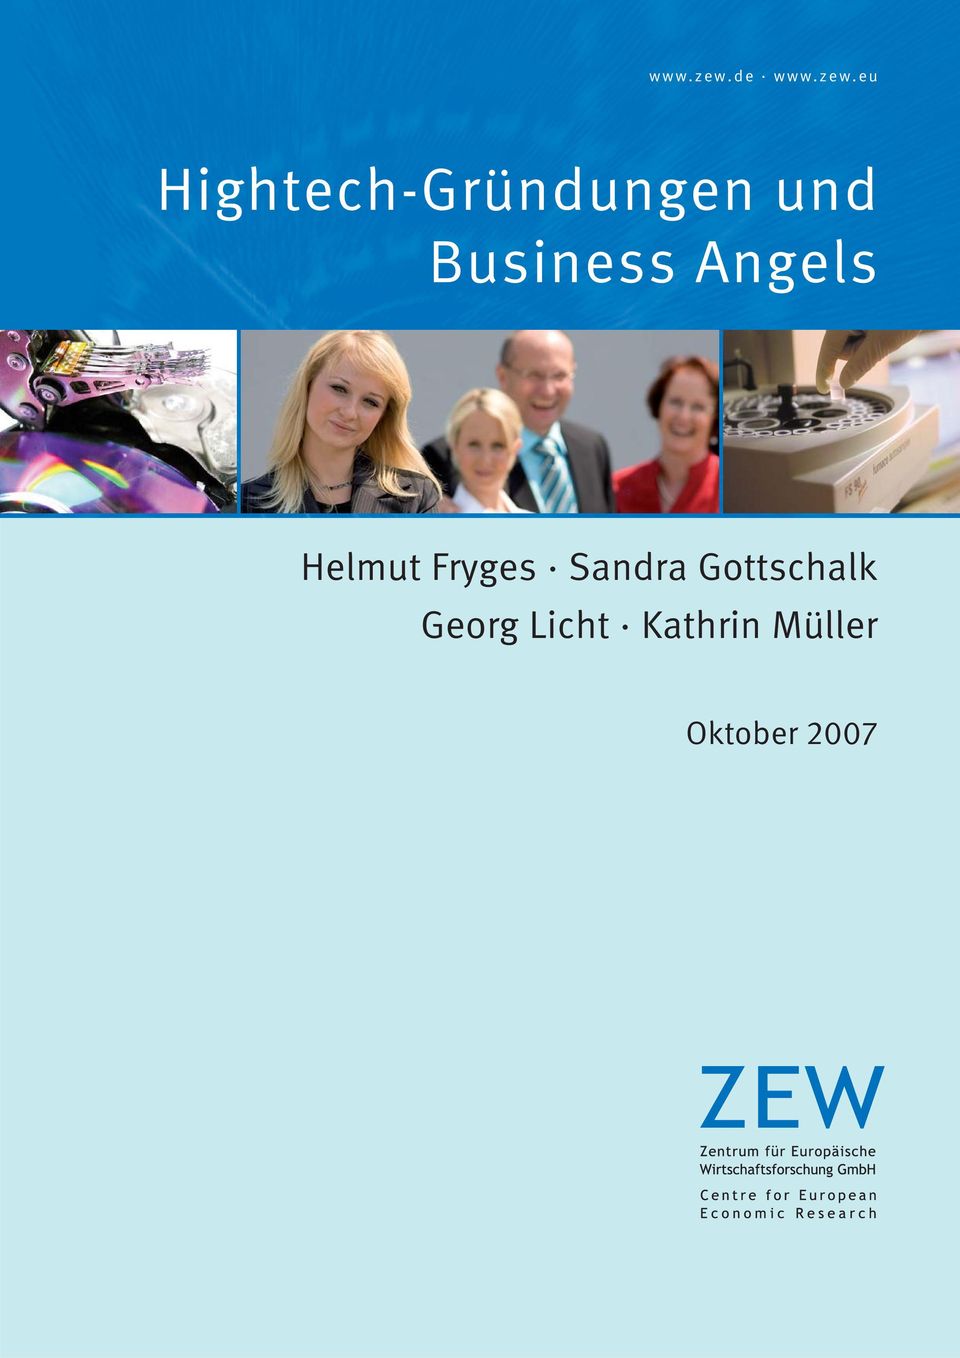 Business Angels Helmut Fryges